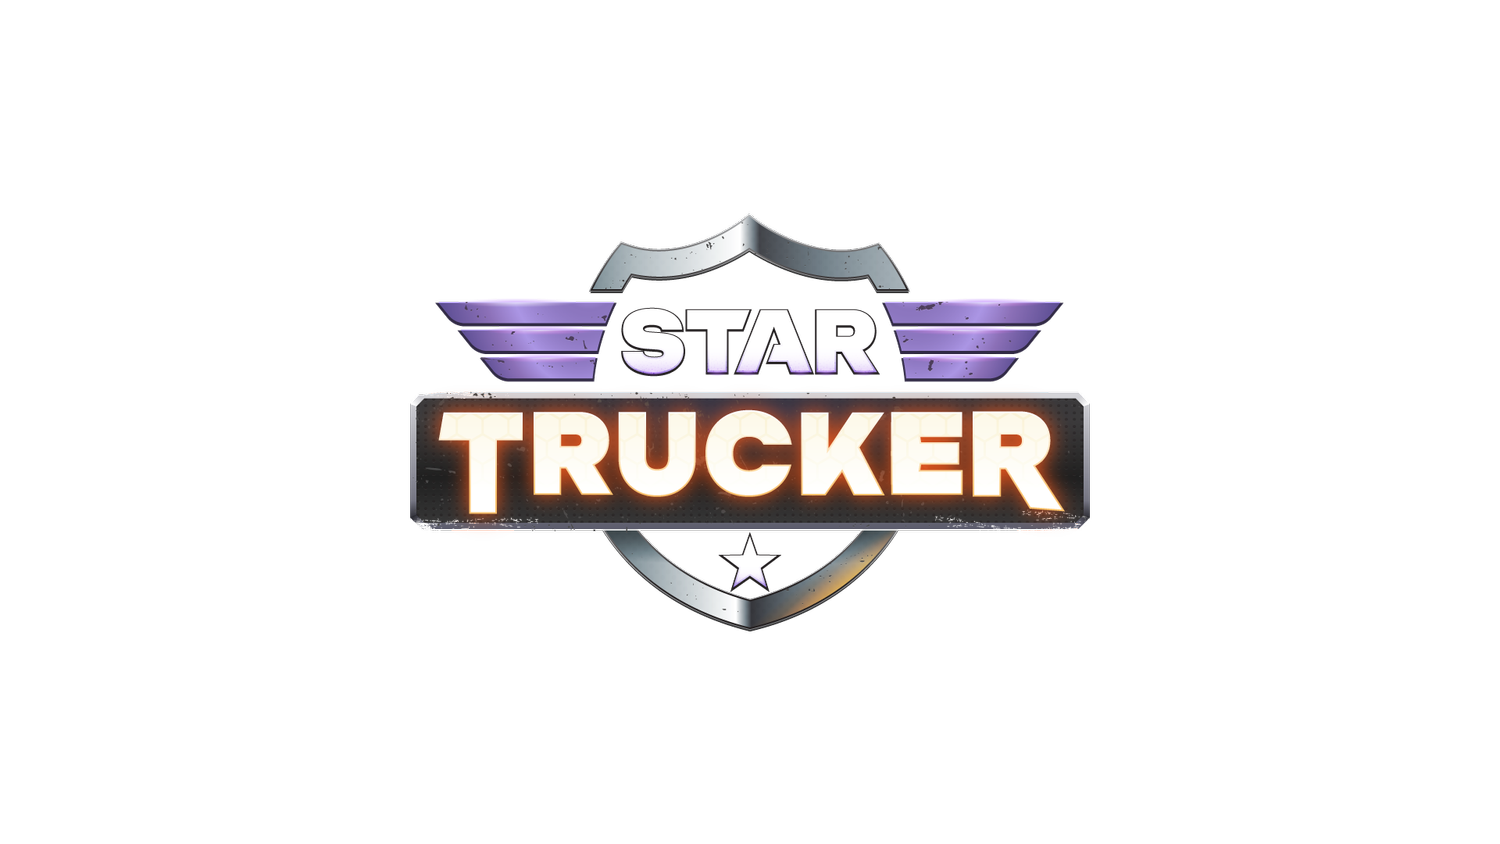 Star Trucker